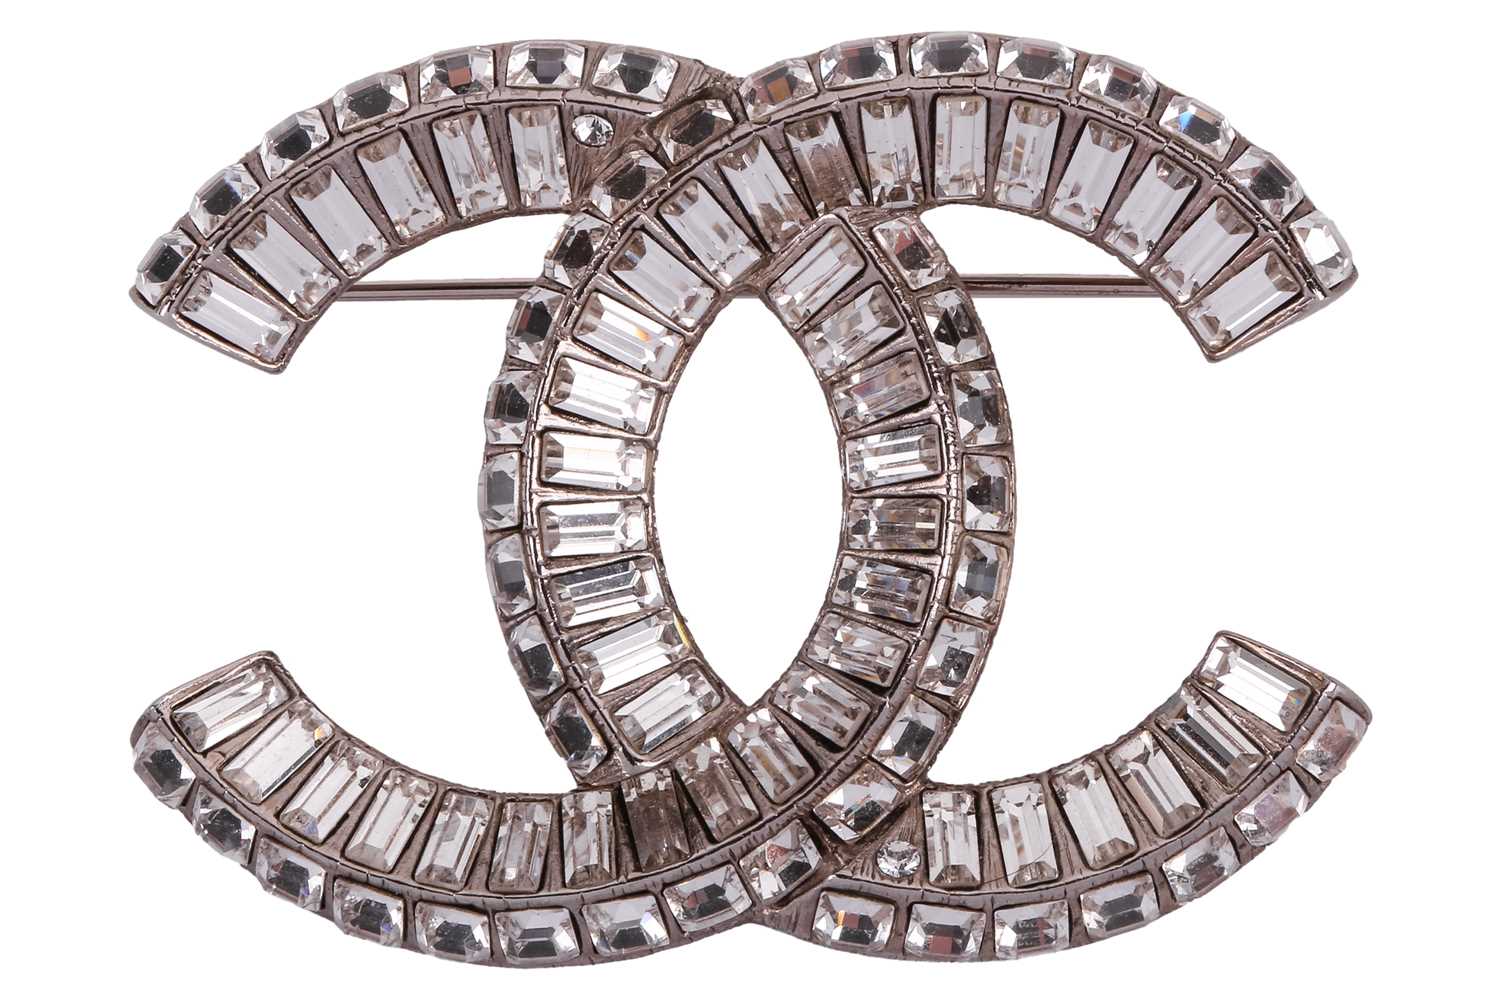 Lot 57 - Chanel - an interlocking CC logo brooch